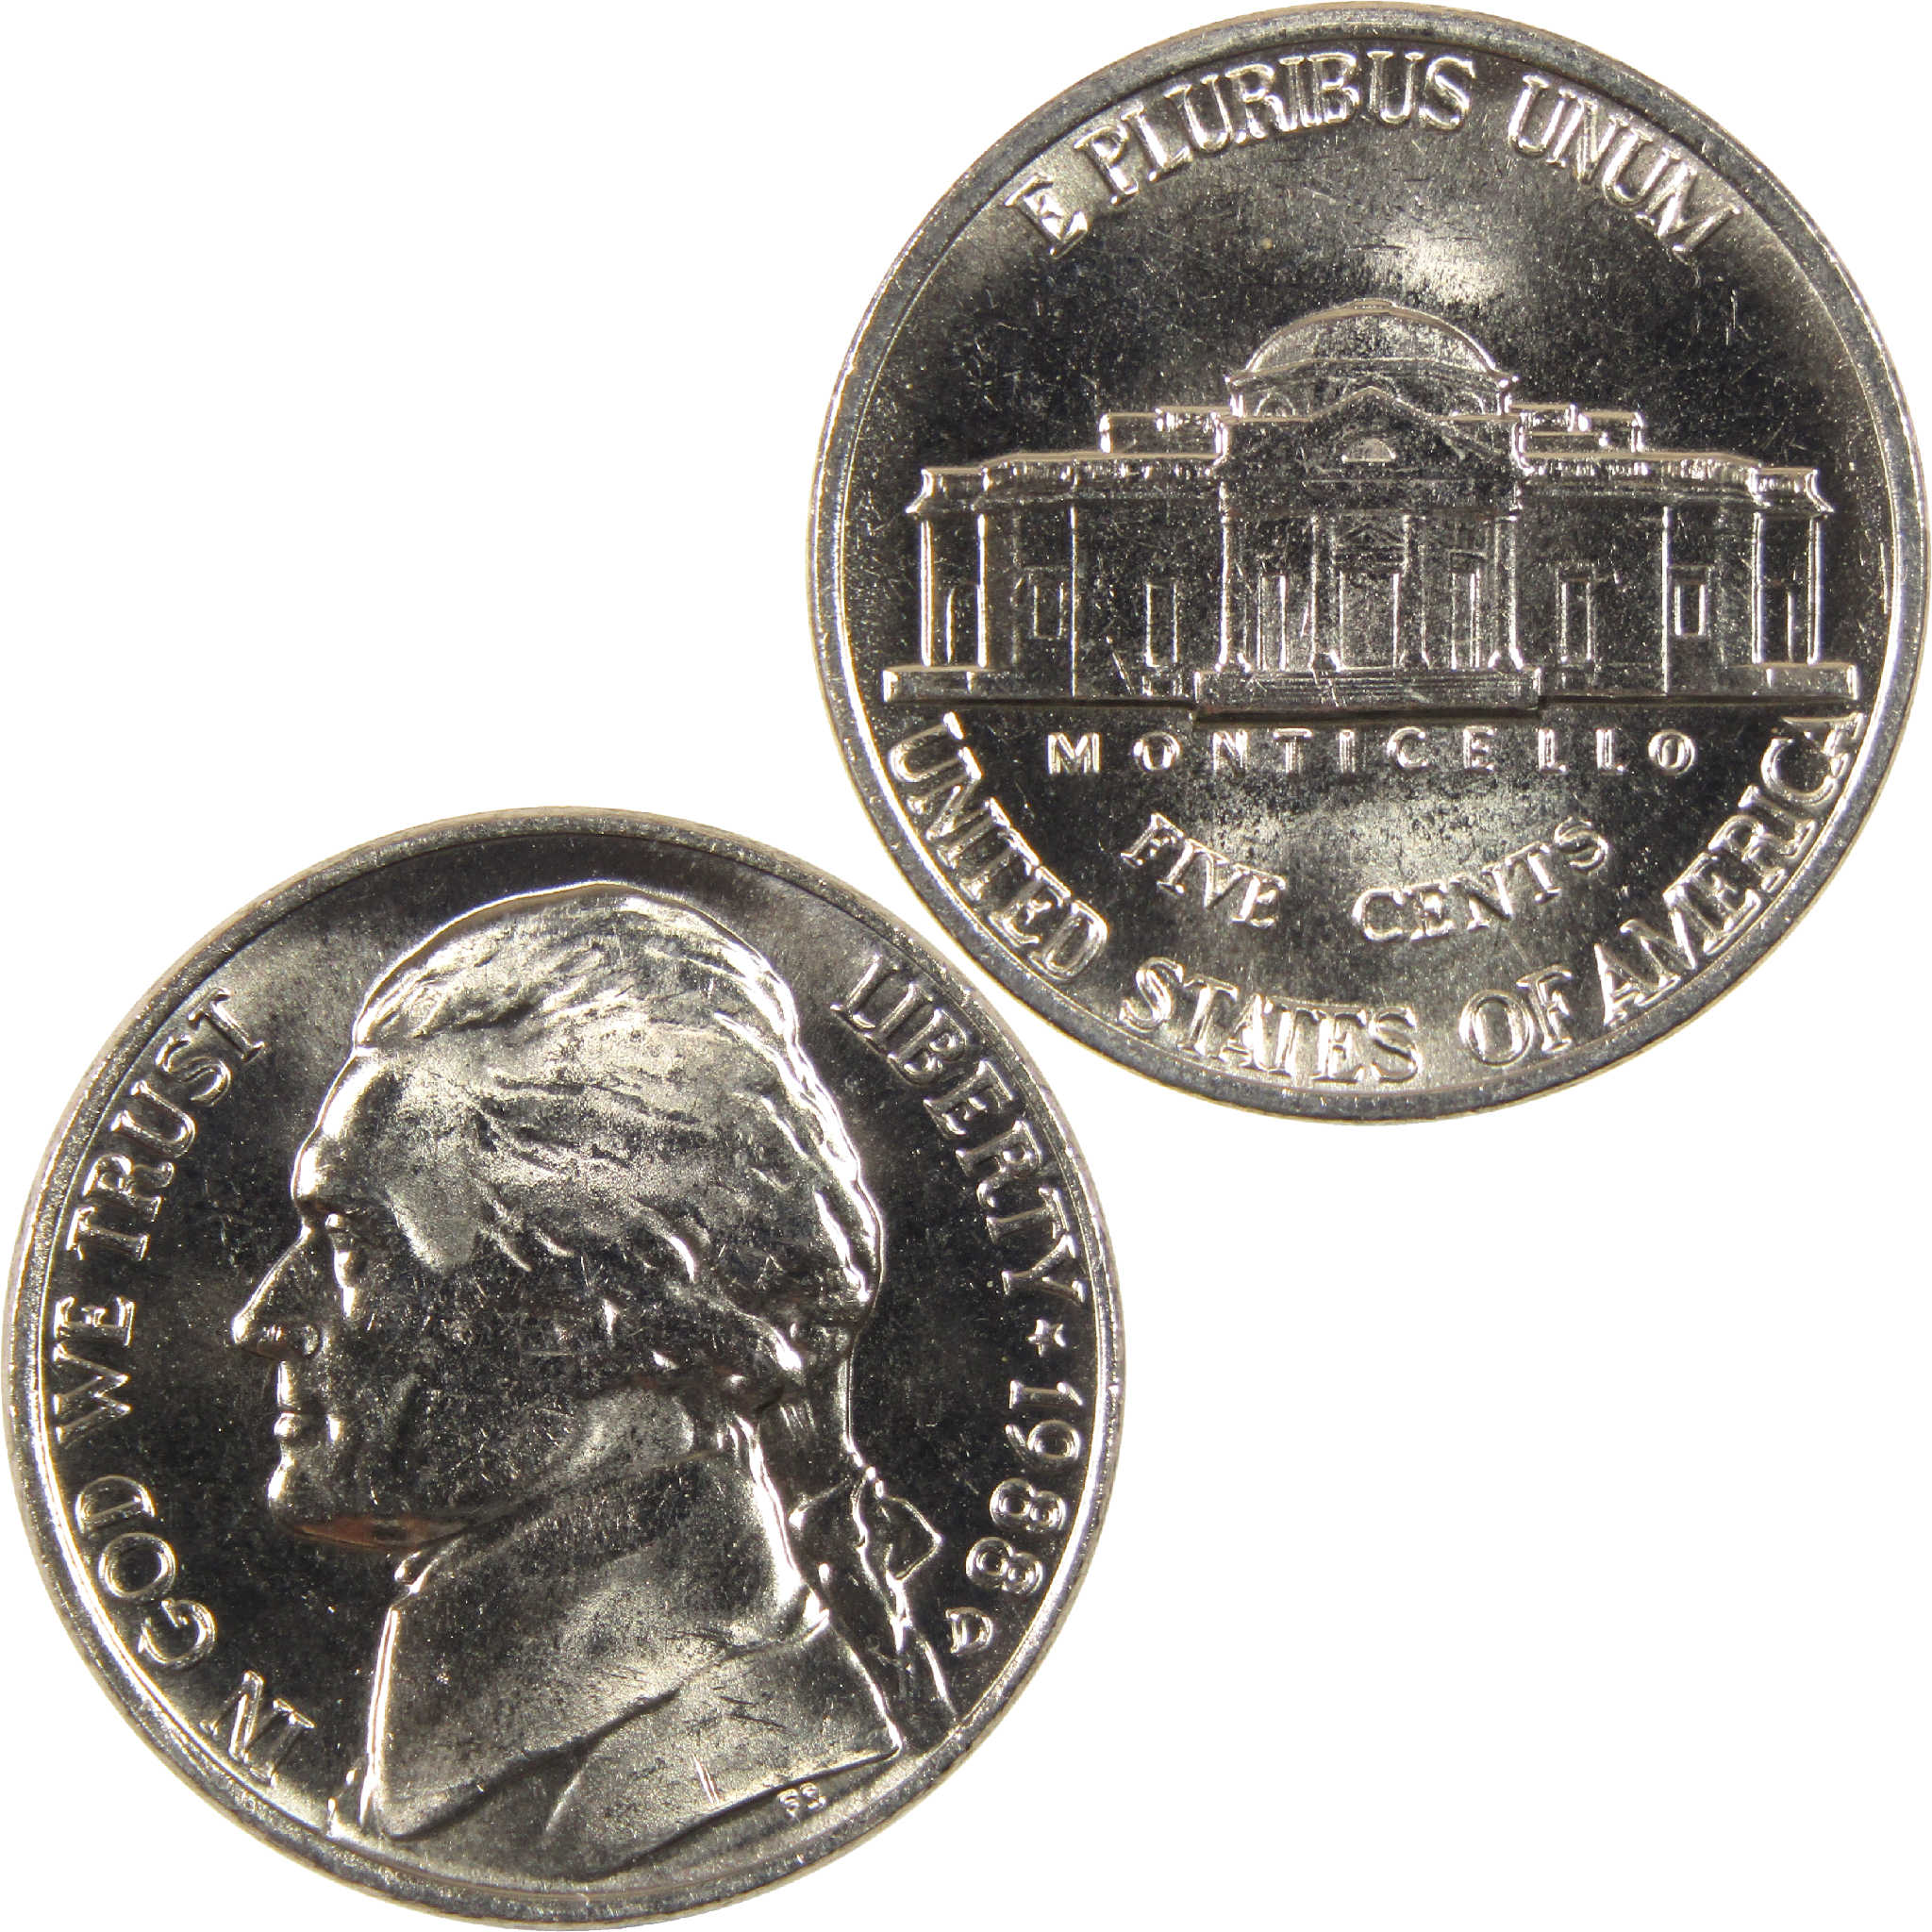 1988 D Jefferson Nickel BU Uncirculated 5c Coin